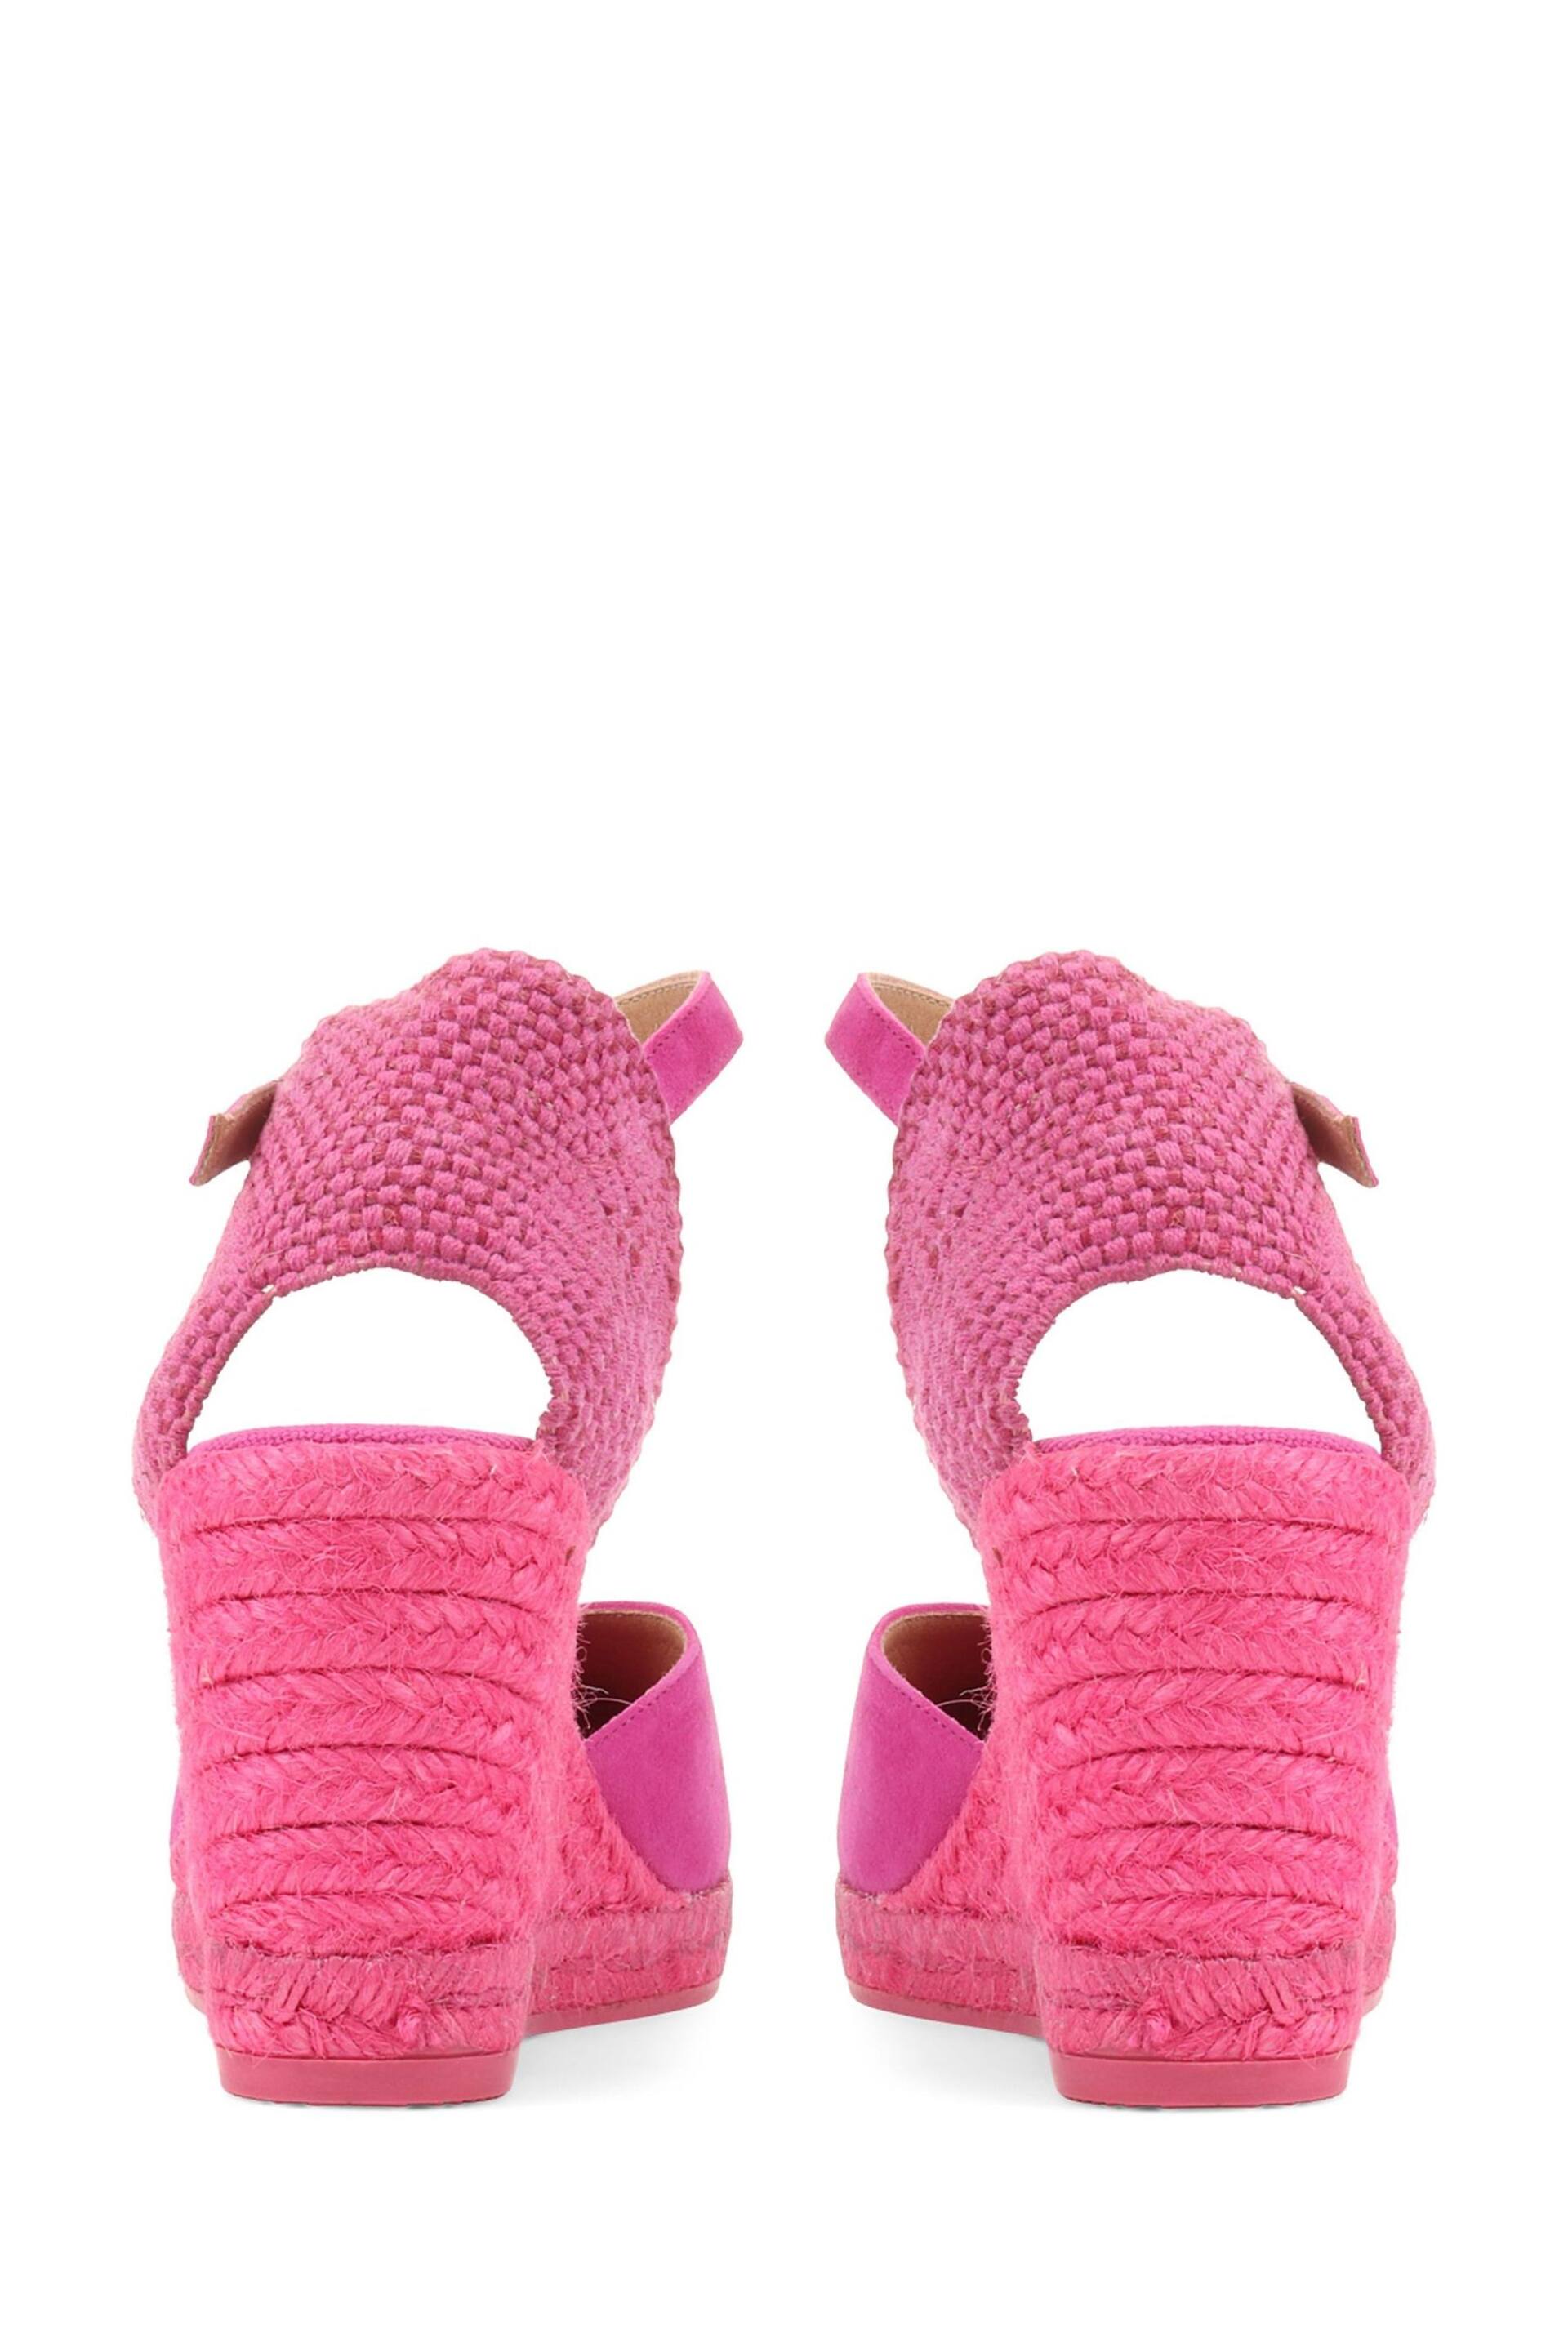 Jones Bootmaker Arabella Wedge Shoes - Image 5 of 5